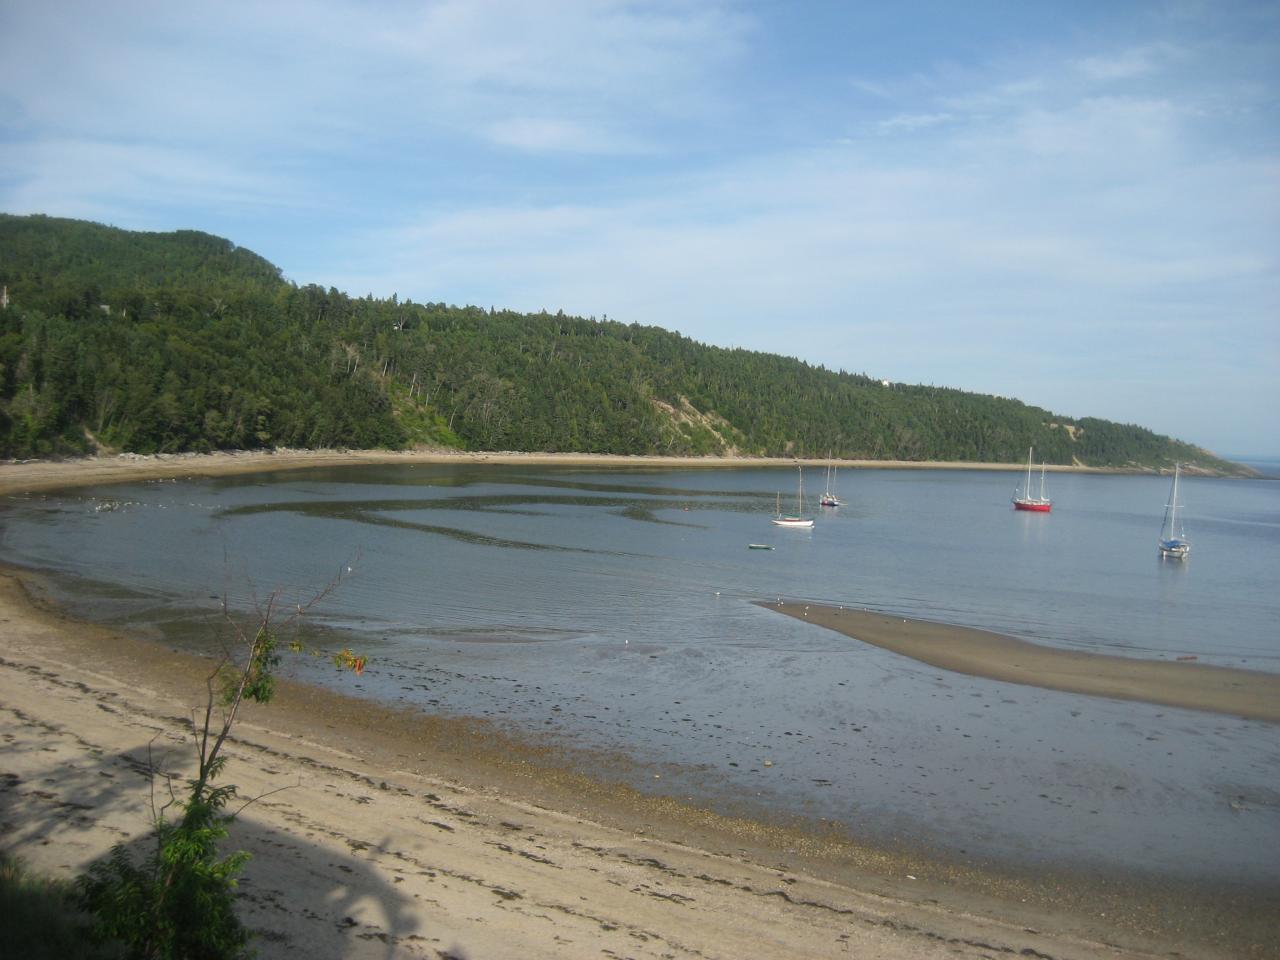 Baie de Tadoussac